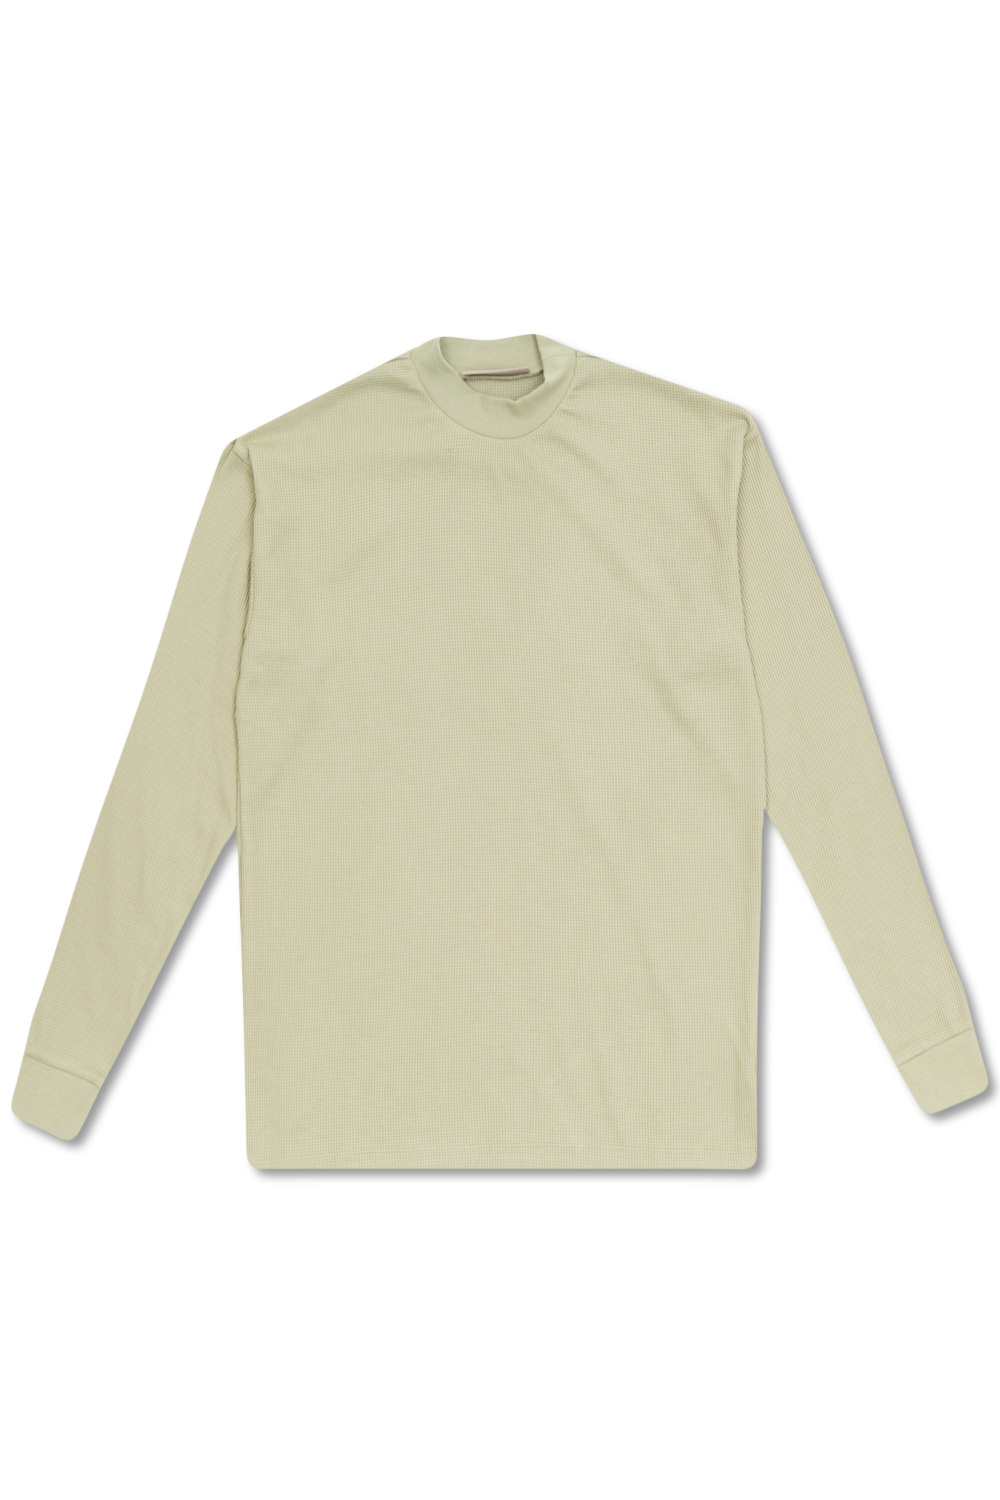 Napapijri S-Box long-sleeved T-shirt in grey Textured sweatshirt